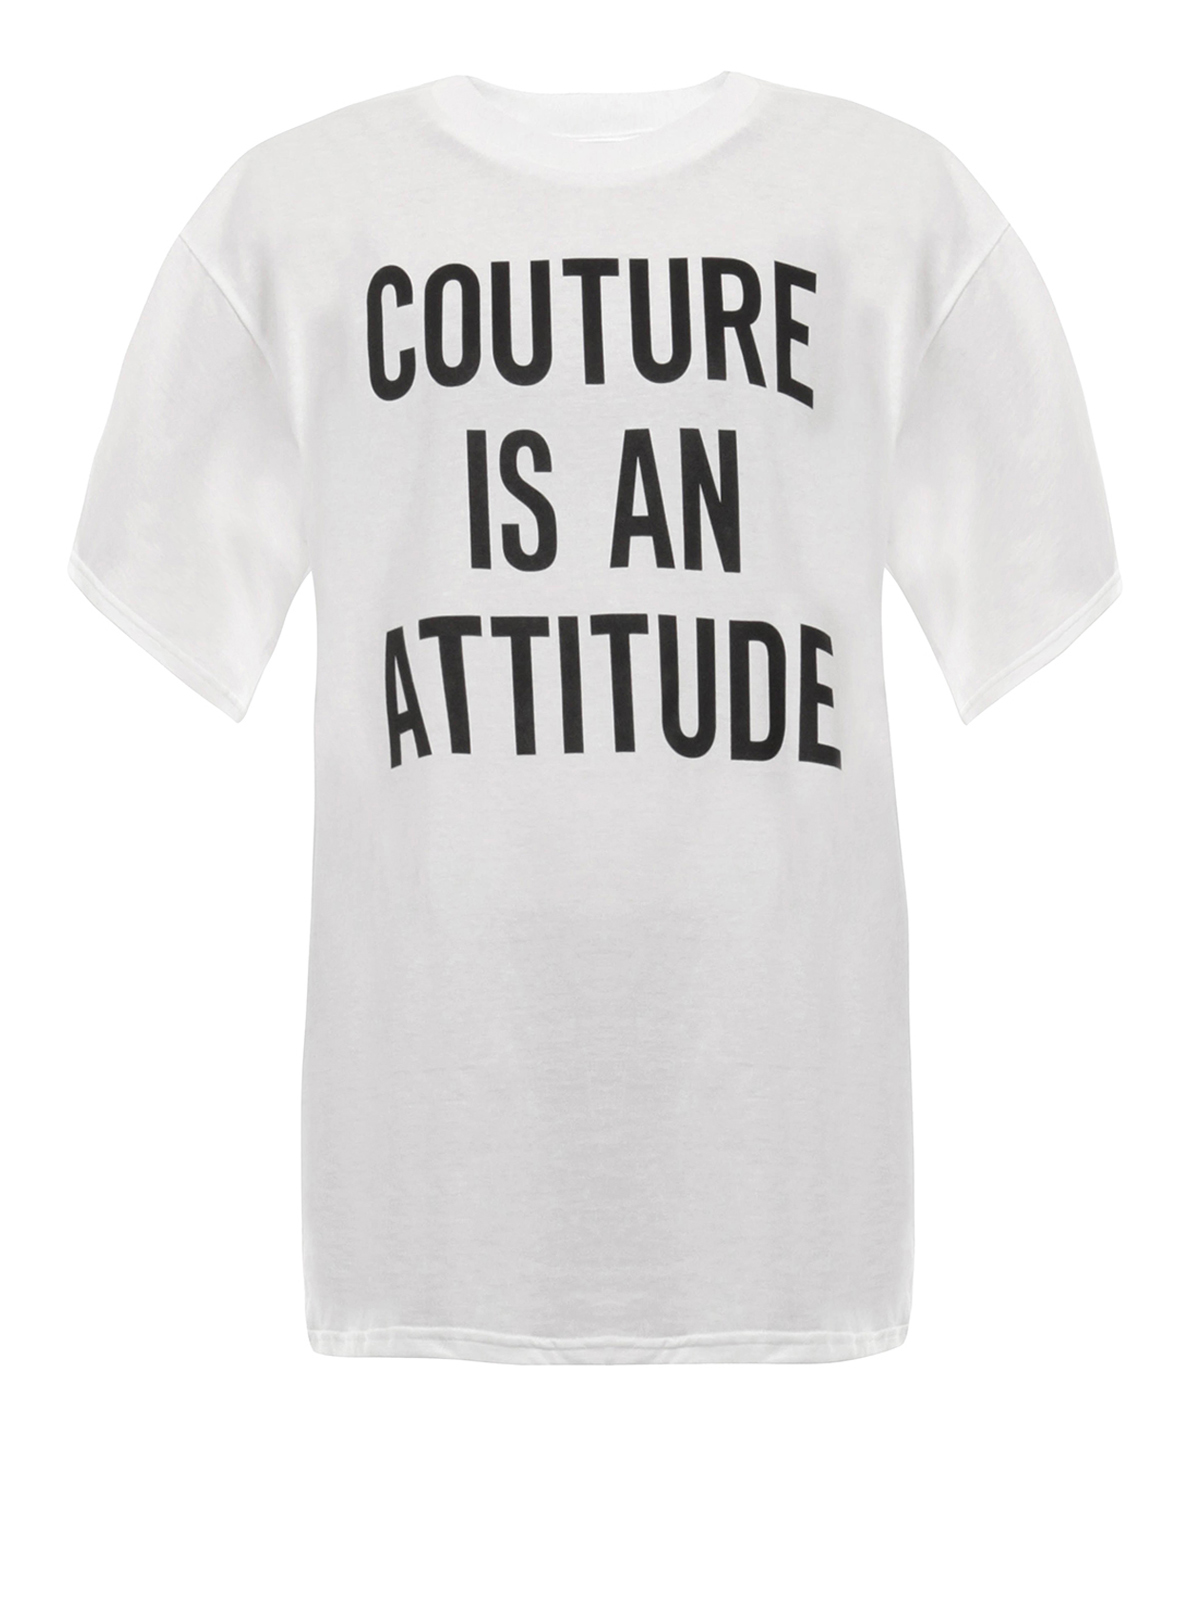 Life is an attitude. Attitude футболка мужская. Футболка Bad attitude. Rock attitude футболка.